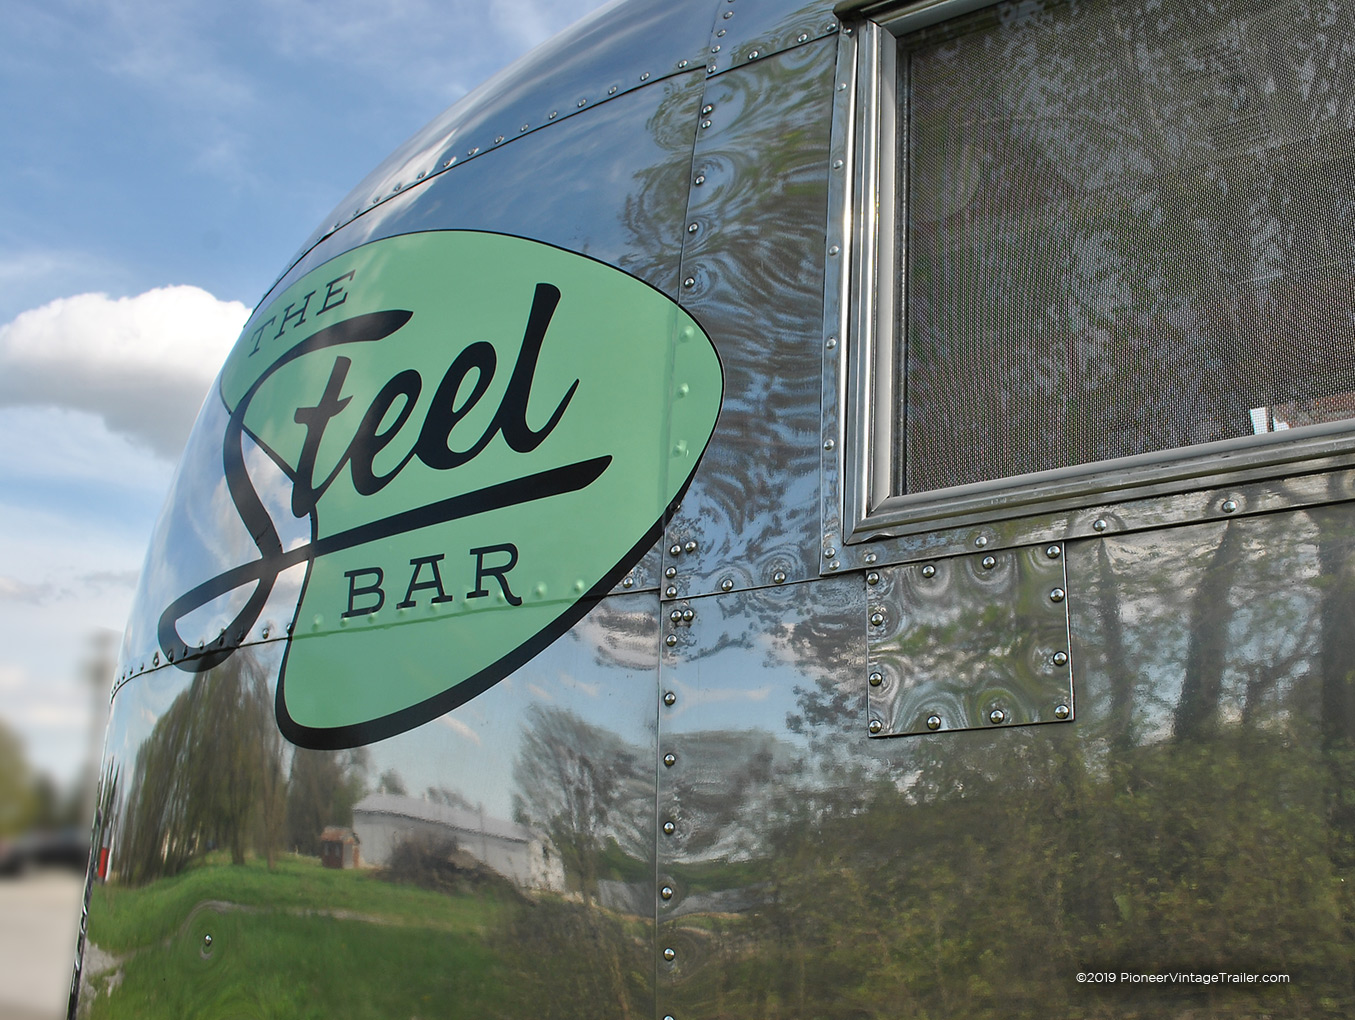 The Steel Bar trailer - Chicago